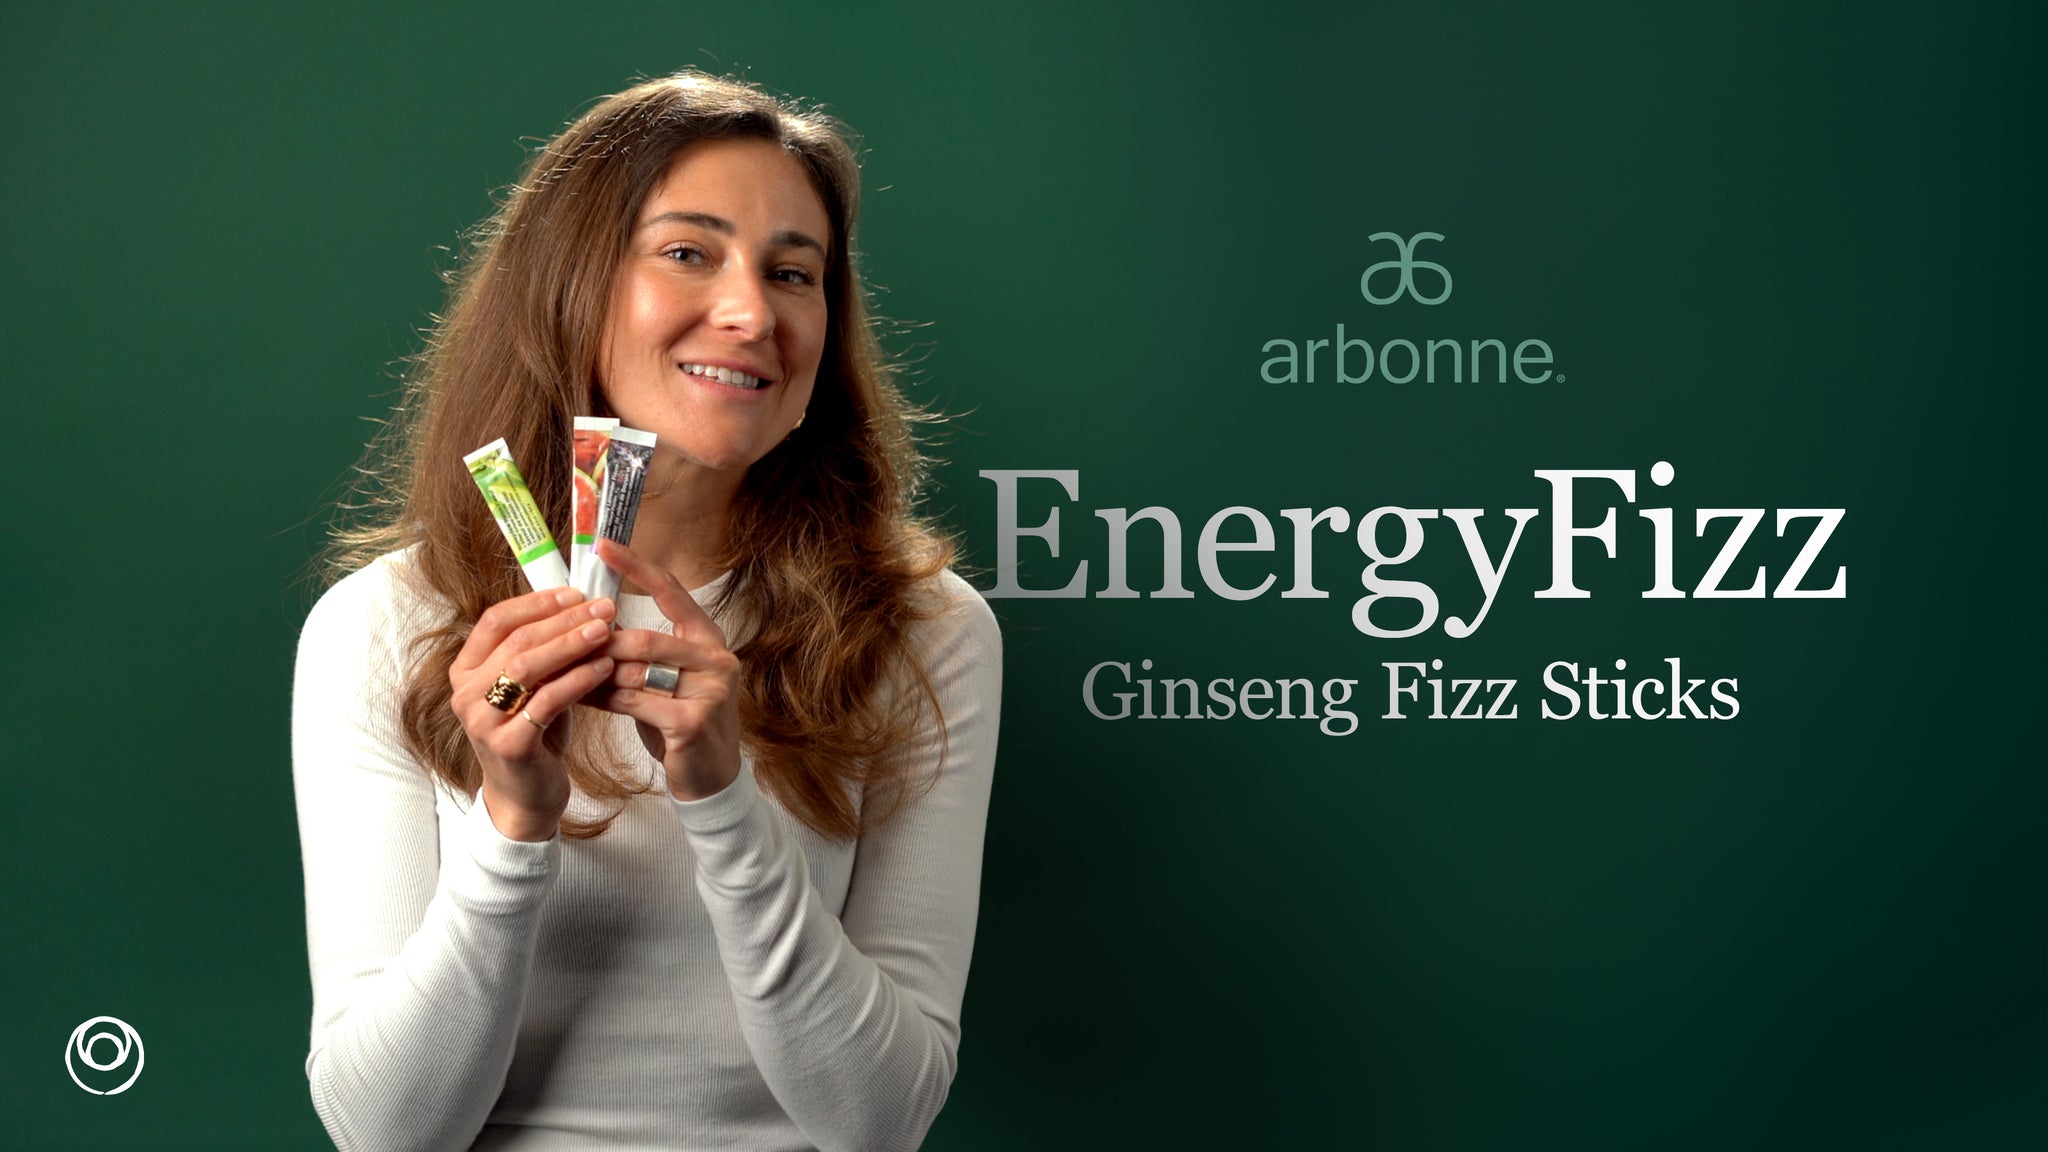 Arbonne Energy Fizz Video by MindBodySkin.ca